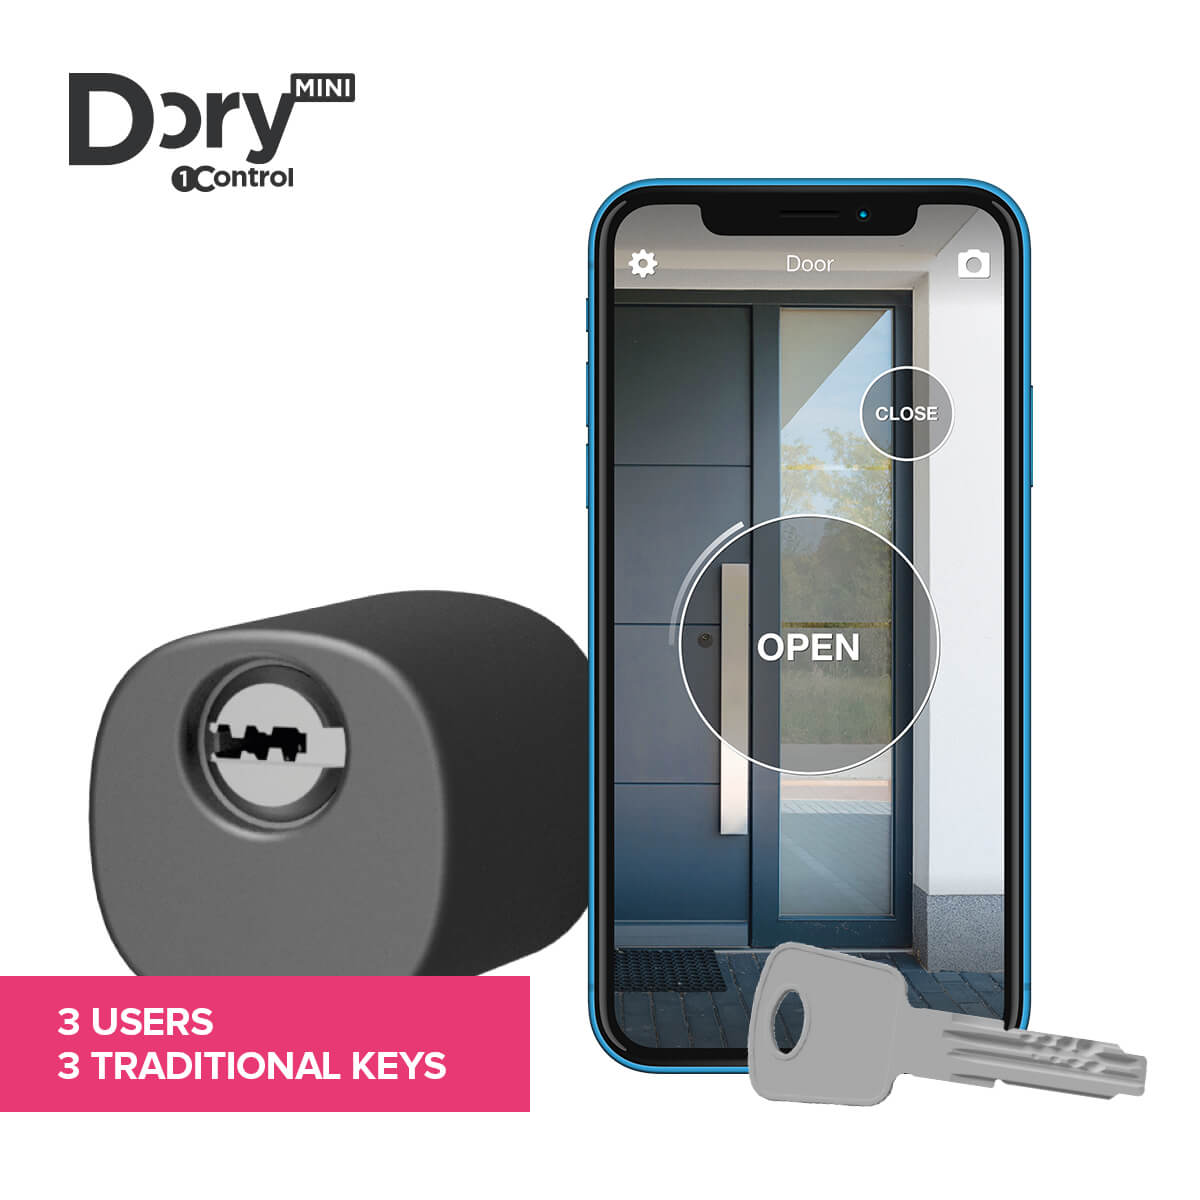 DORY MINI smart home electronic lock